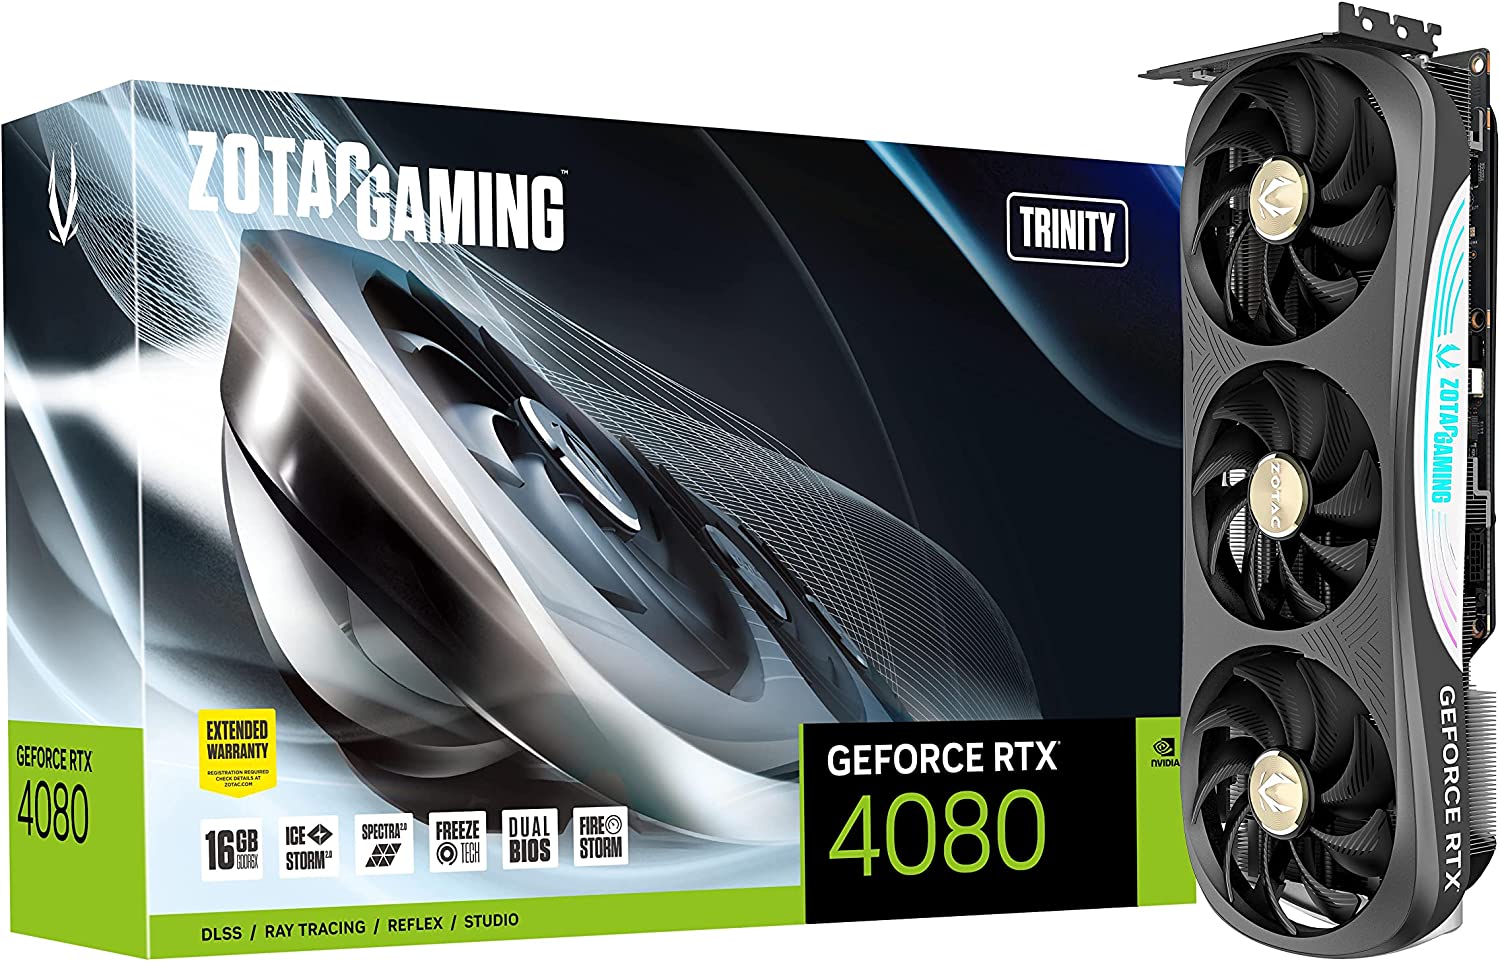 ZOTAC GAMING GeForce RTX 4080 16GB Trinity